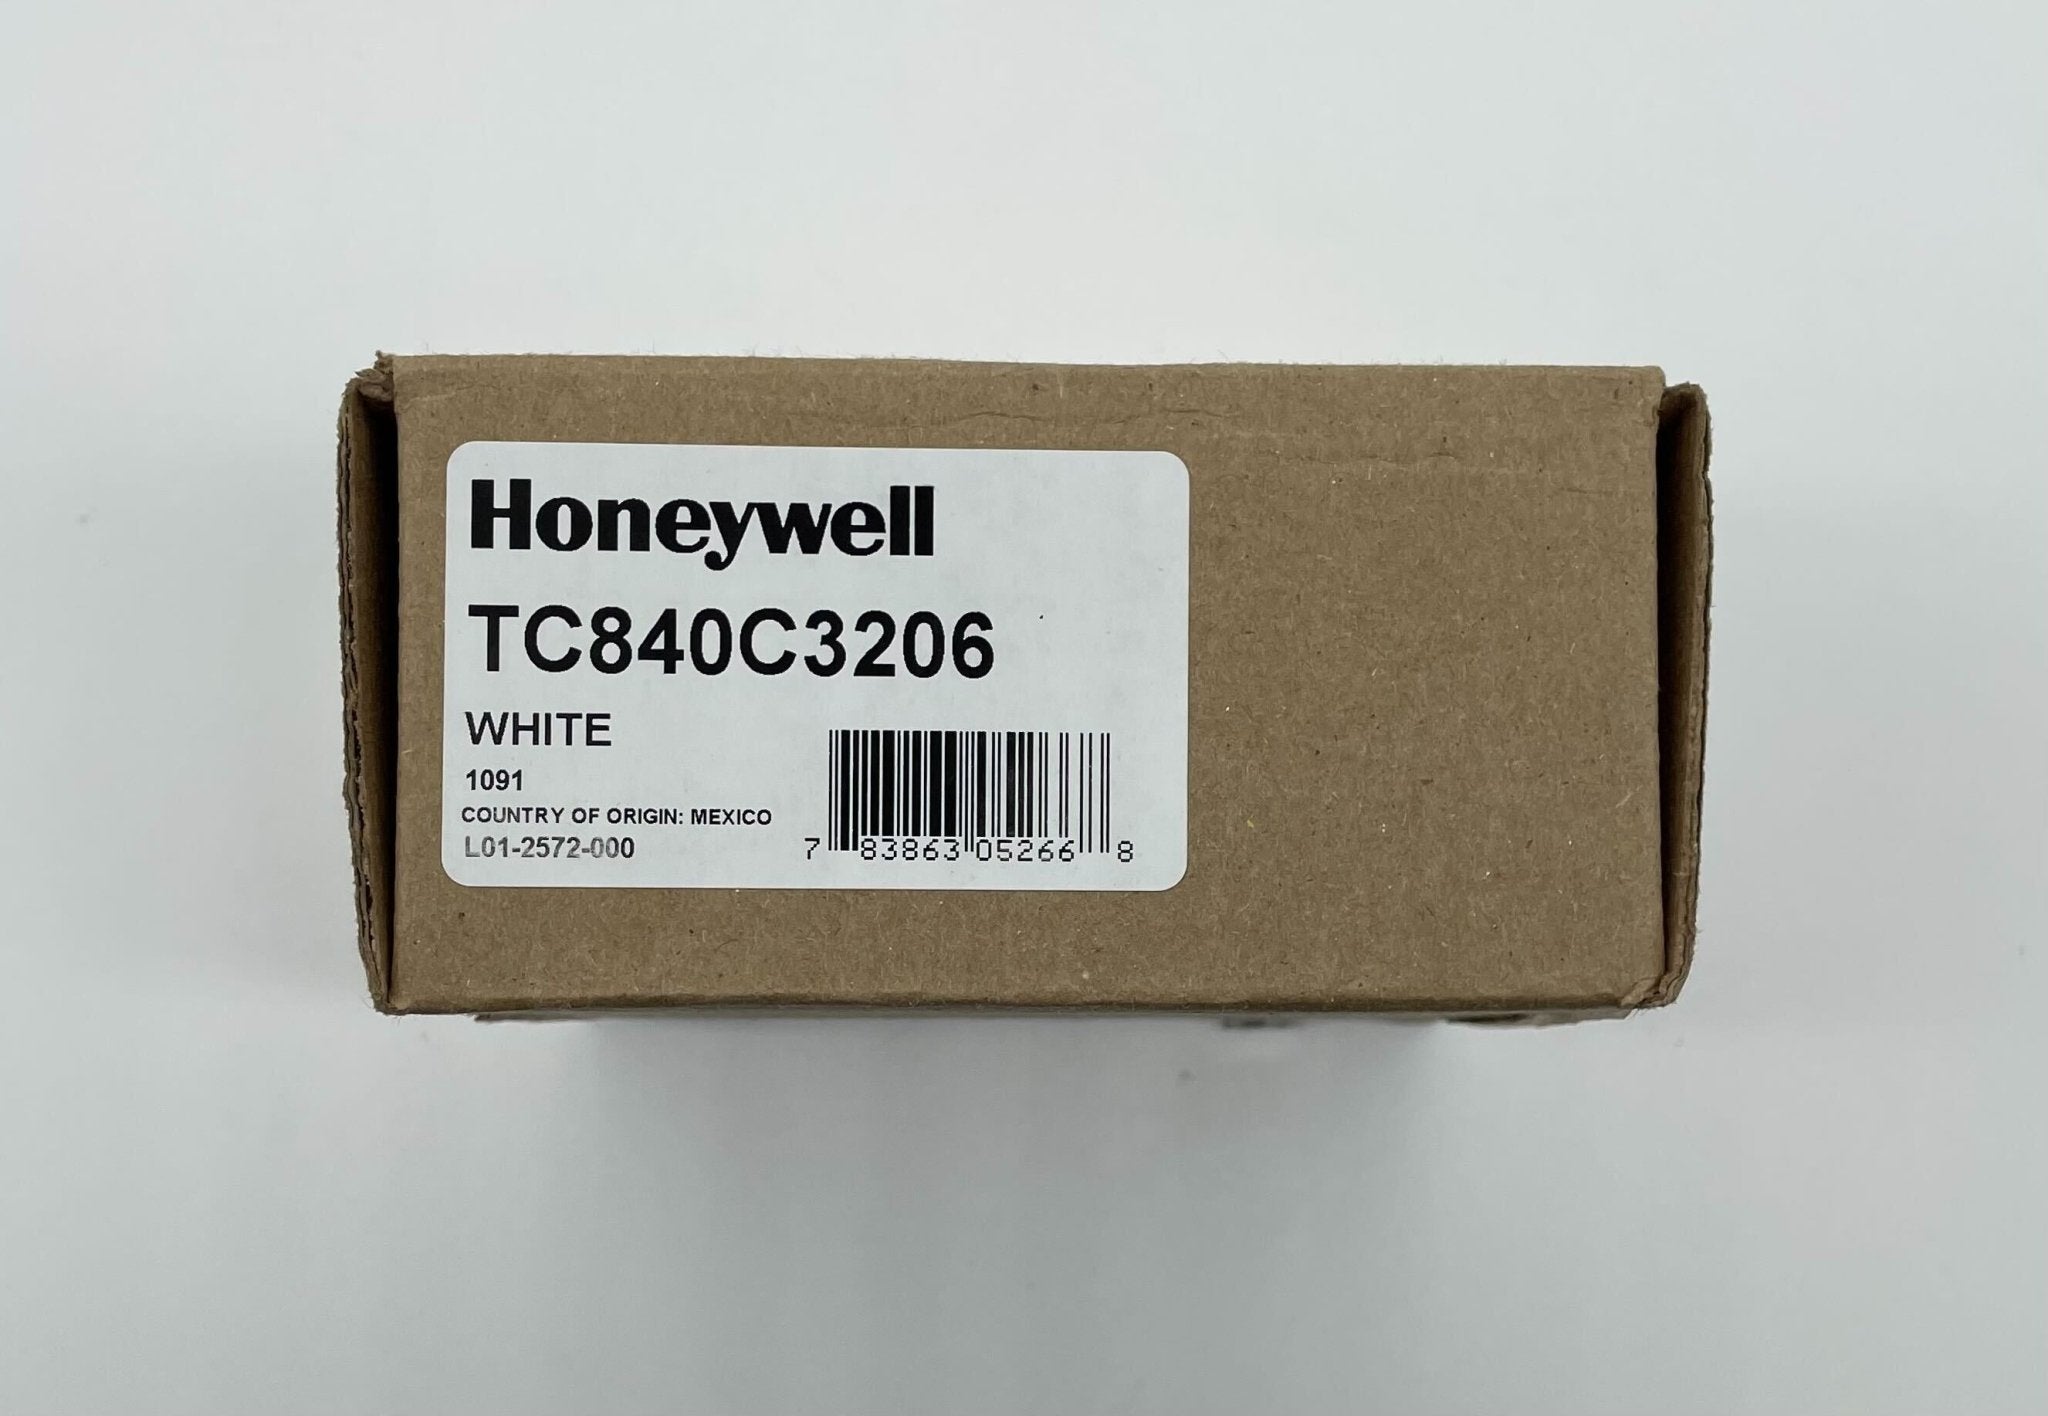 Honeywell TC840C3206 - The Fire Alarm Supplier